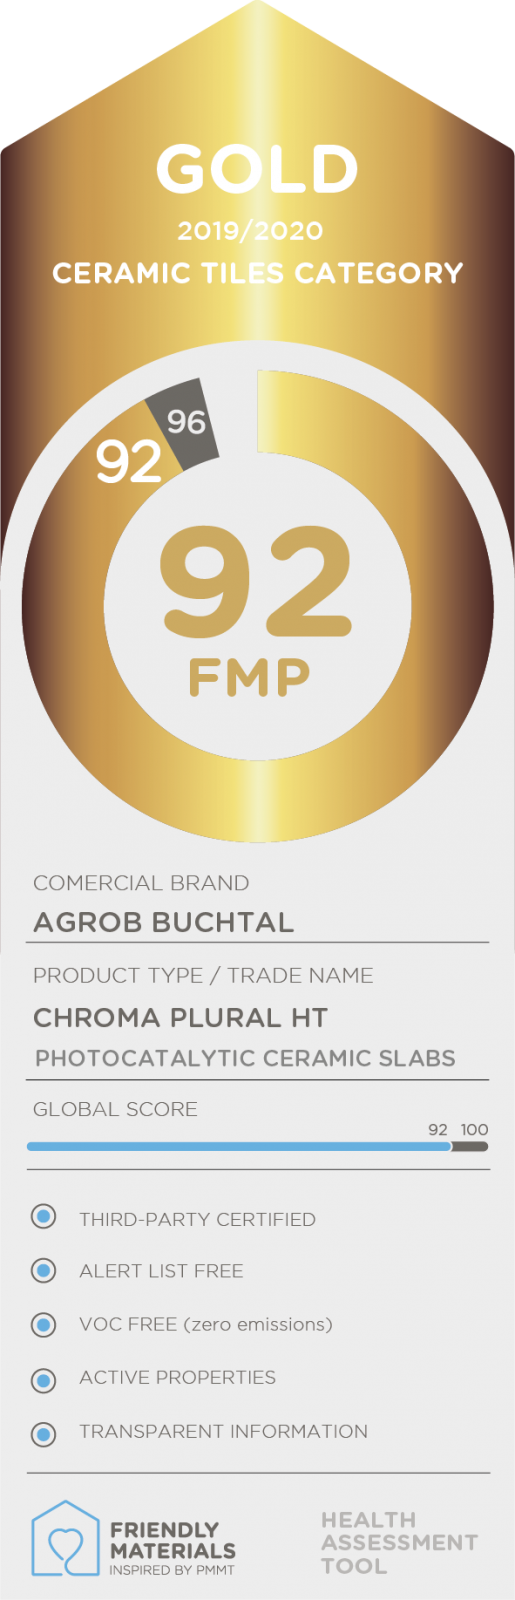 Chroma Plural HT gold 92